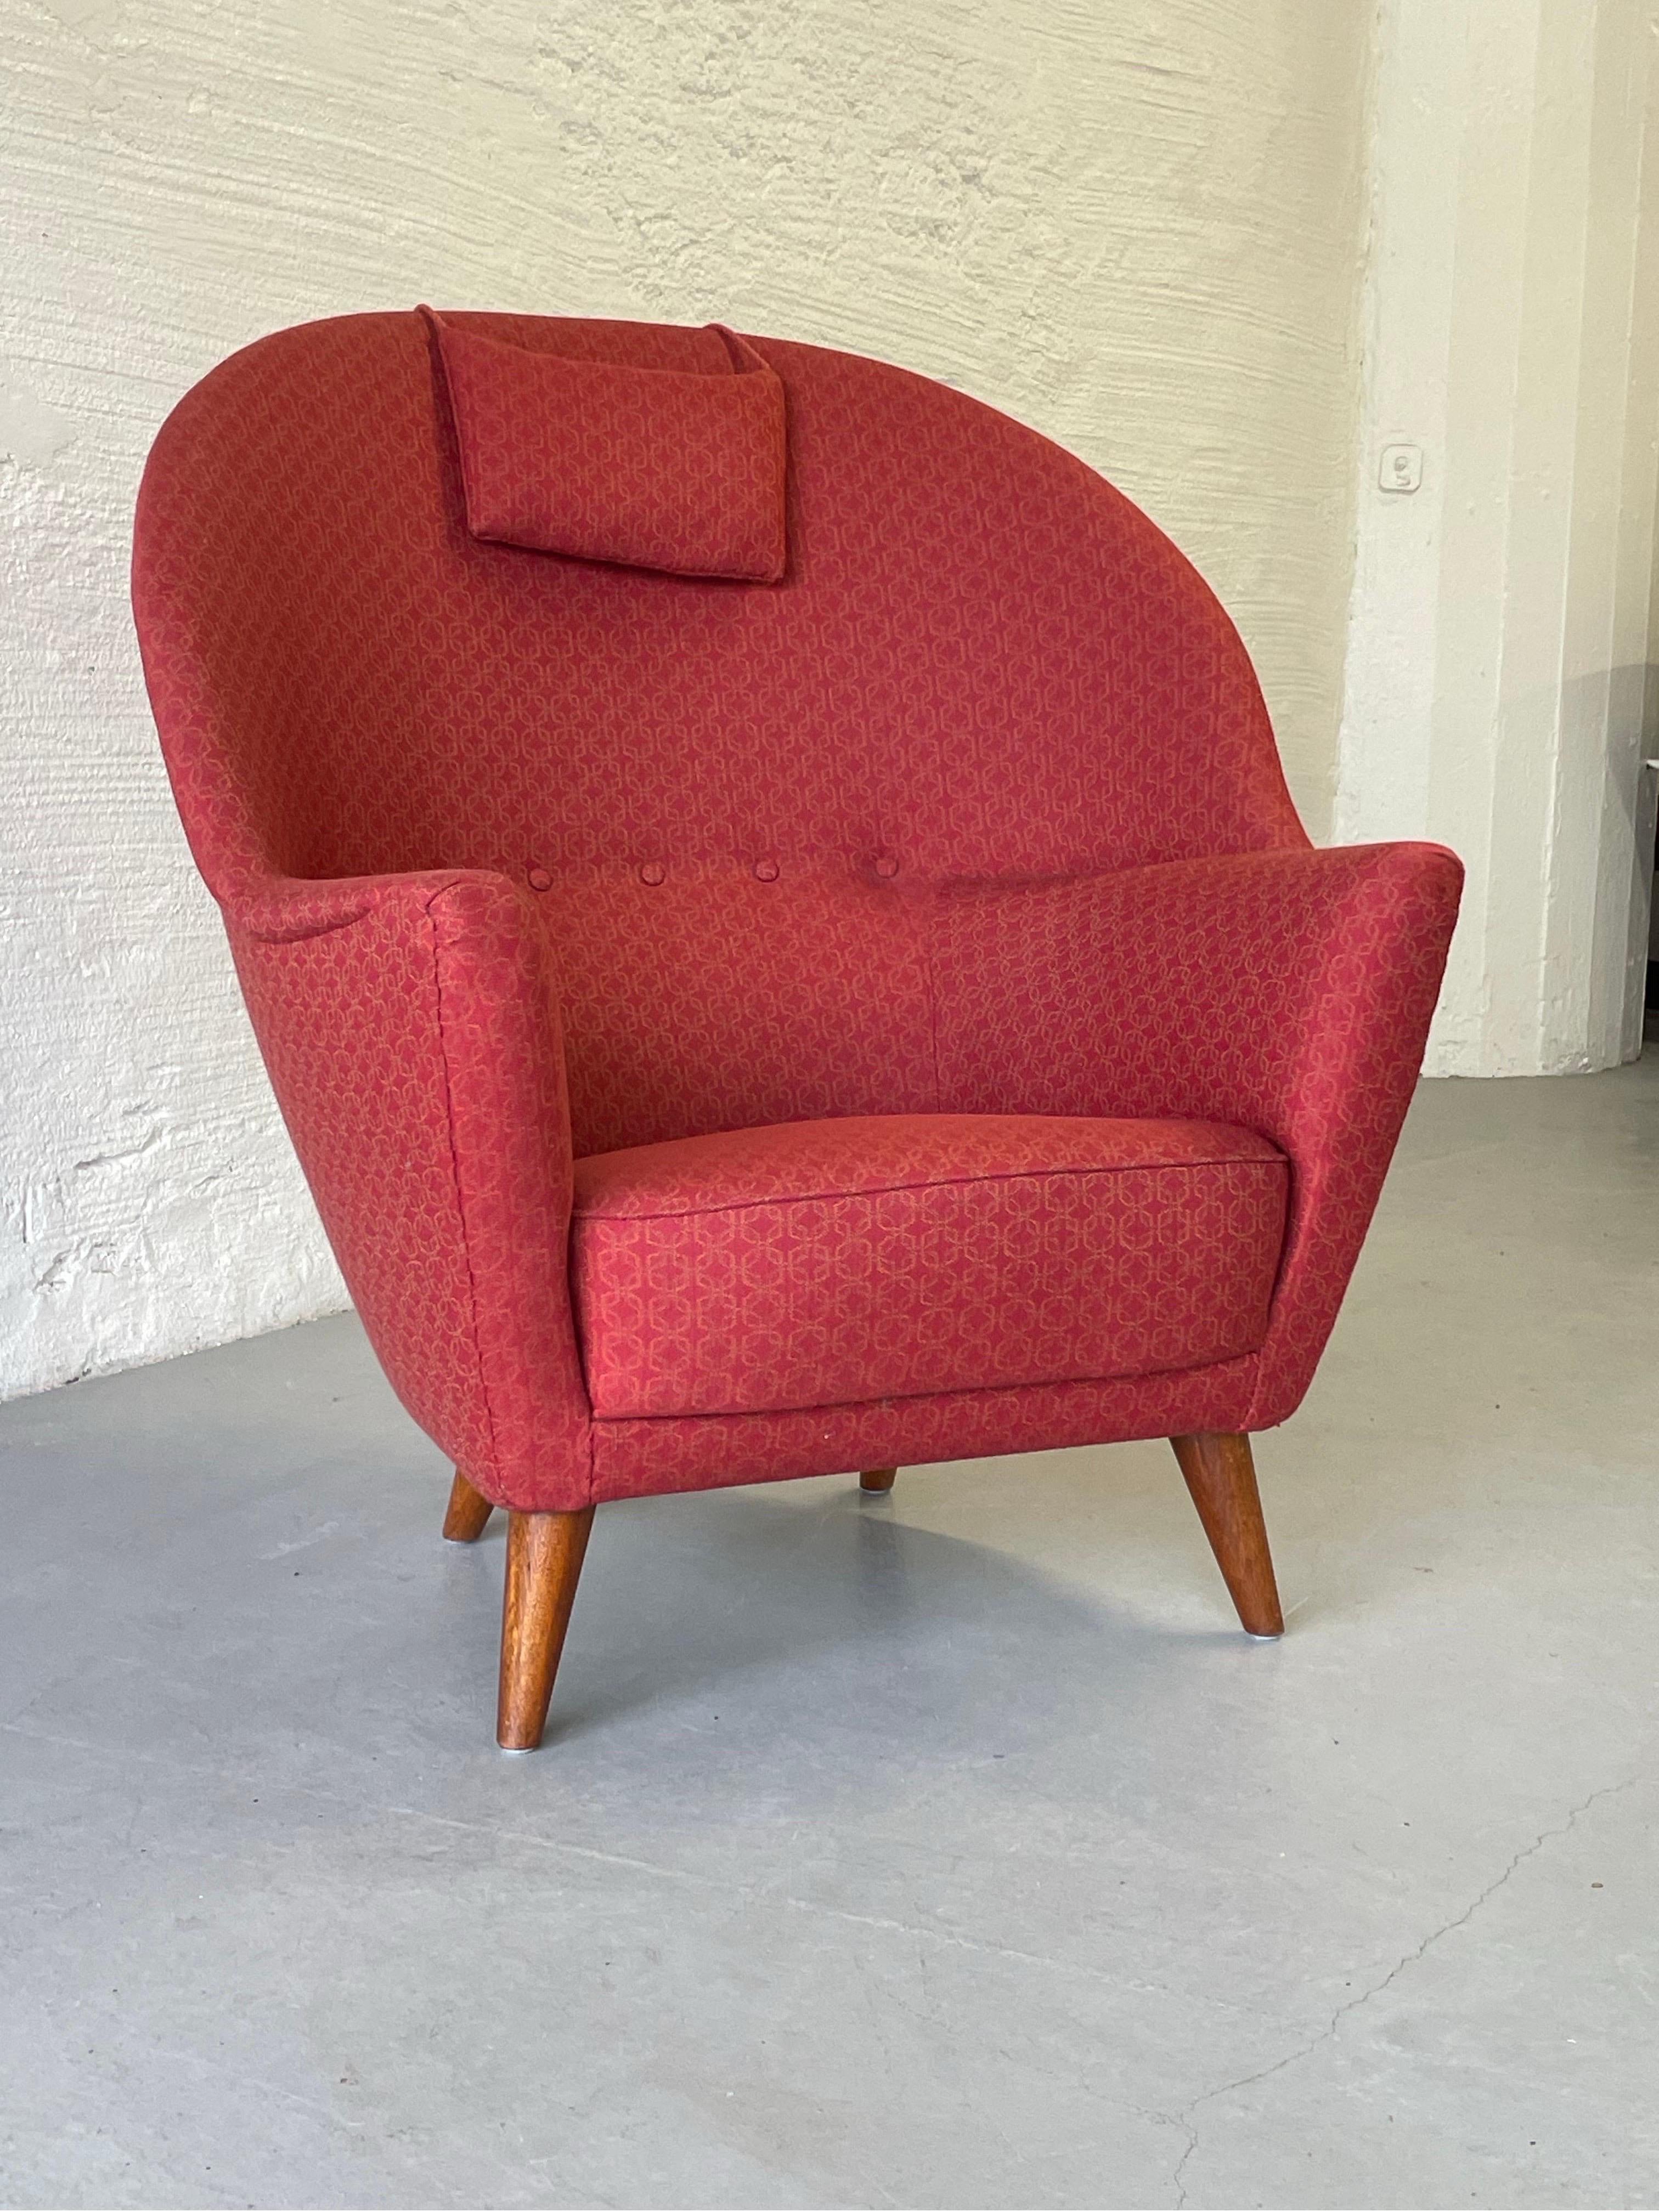 19th Century Mid- Century Modern chair by Fredrik Kayser, modell 2010, Norwegian, 1952 For Sale